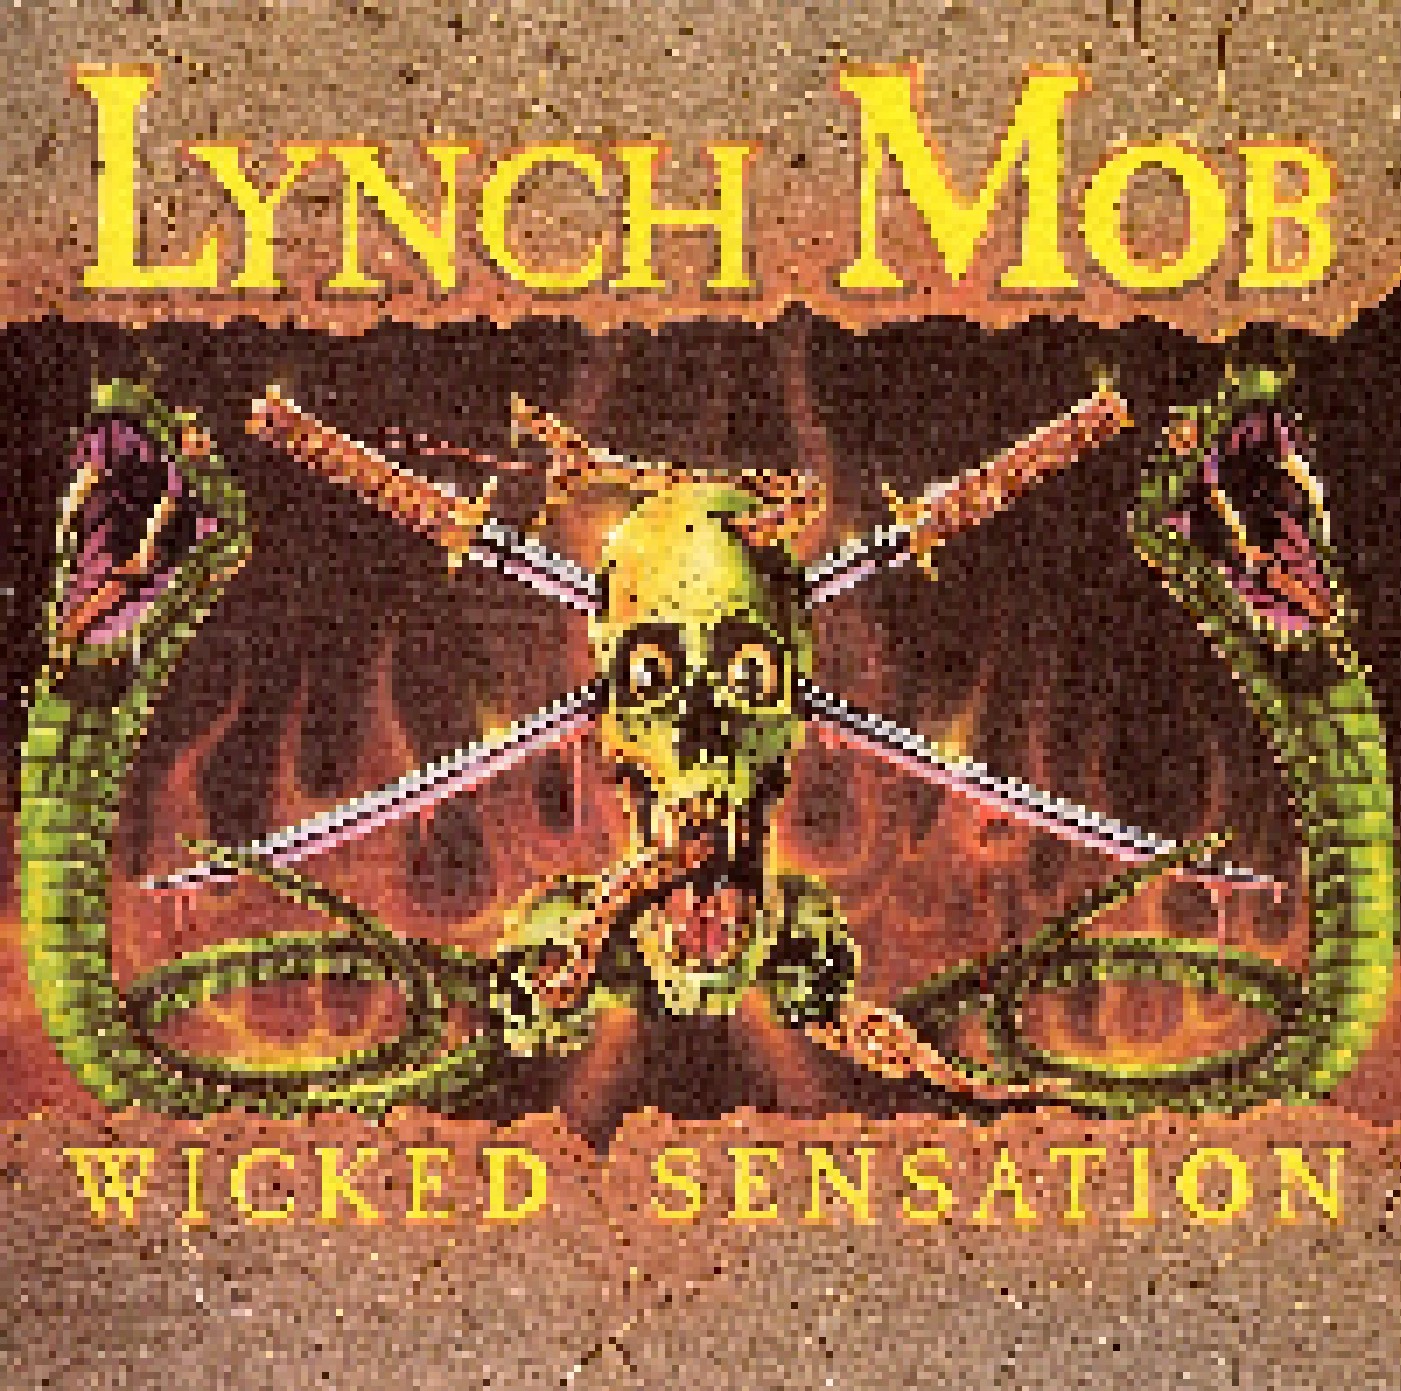 Wicked Sensation Cd 1990 Von Lynch Mob